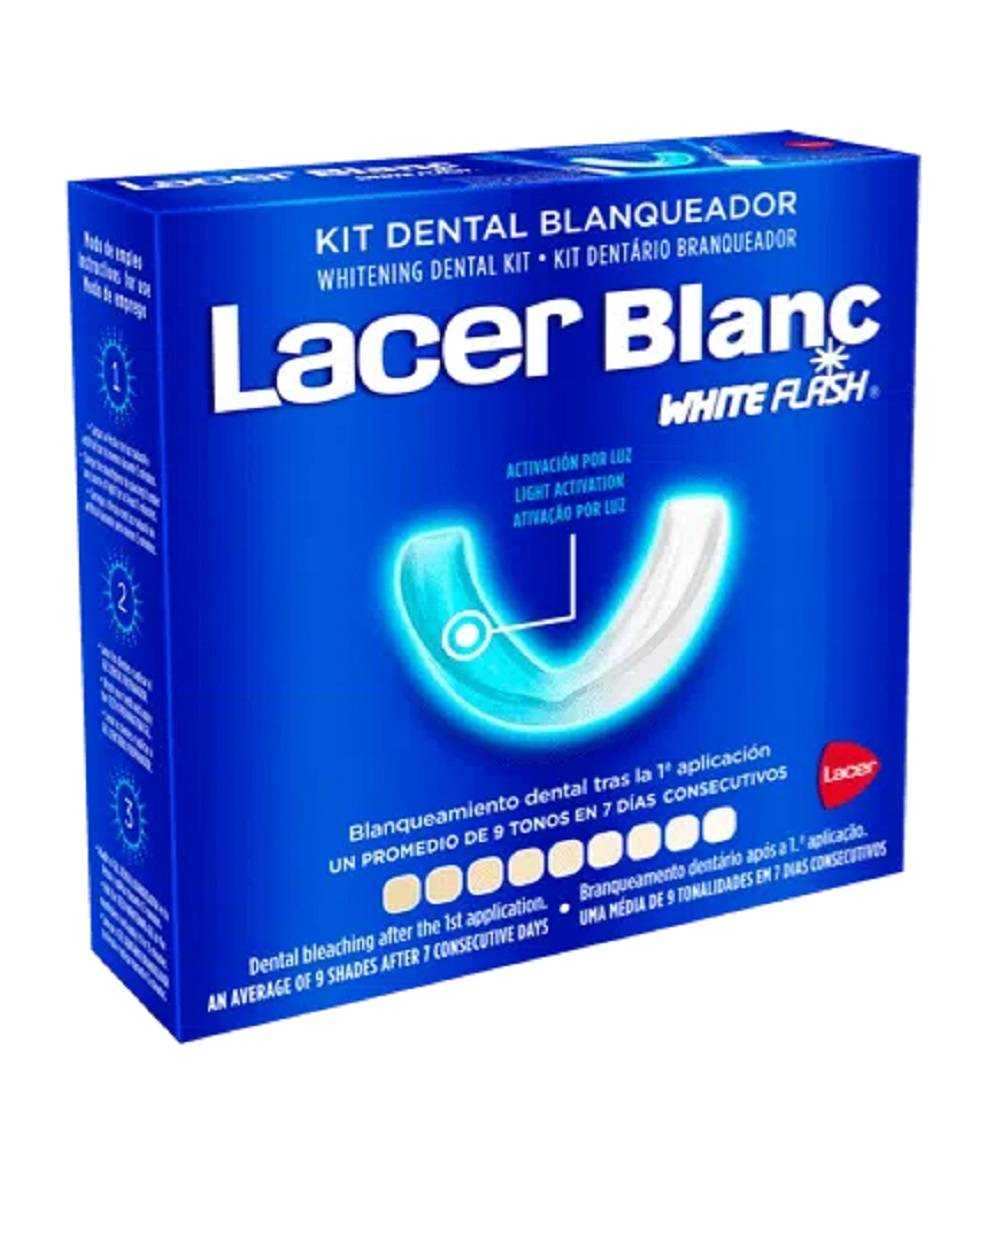 Lacerblanc Kit Blanqueador White Flash